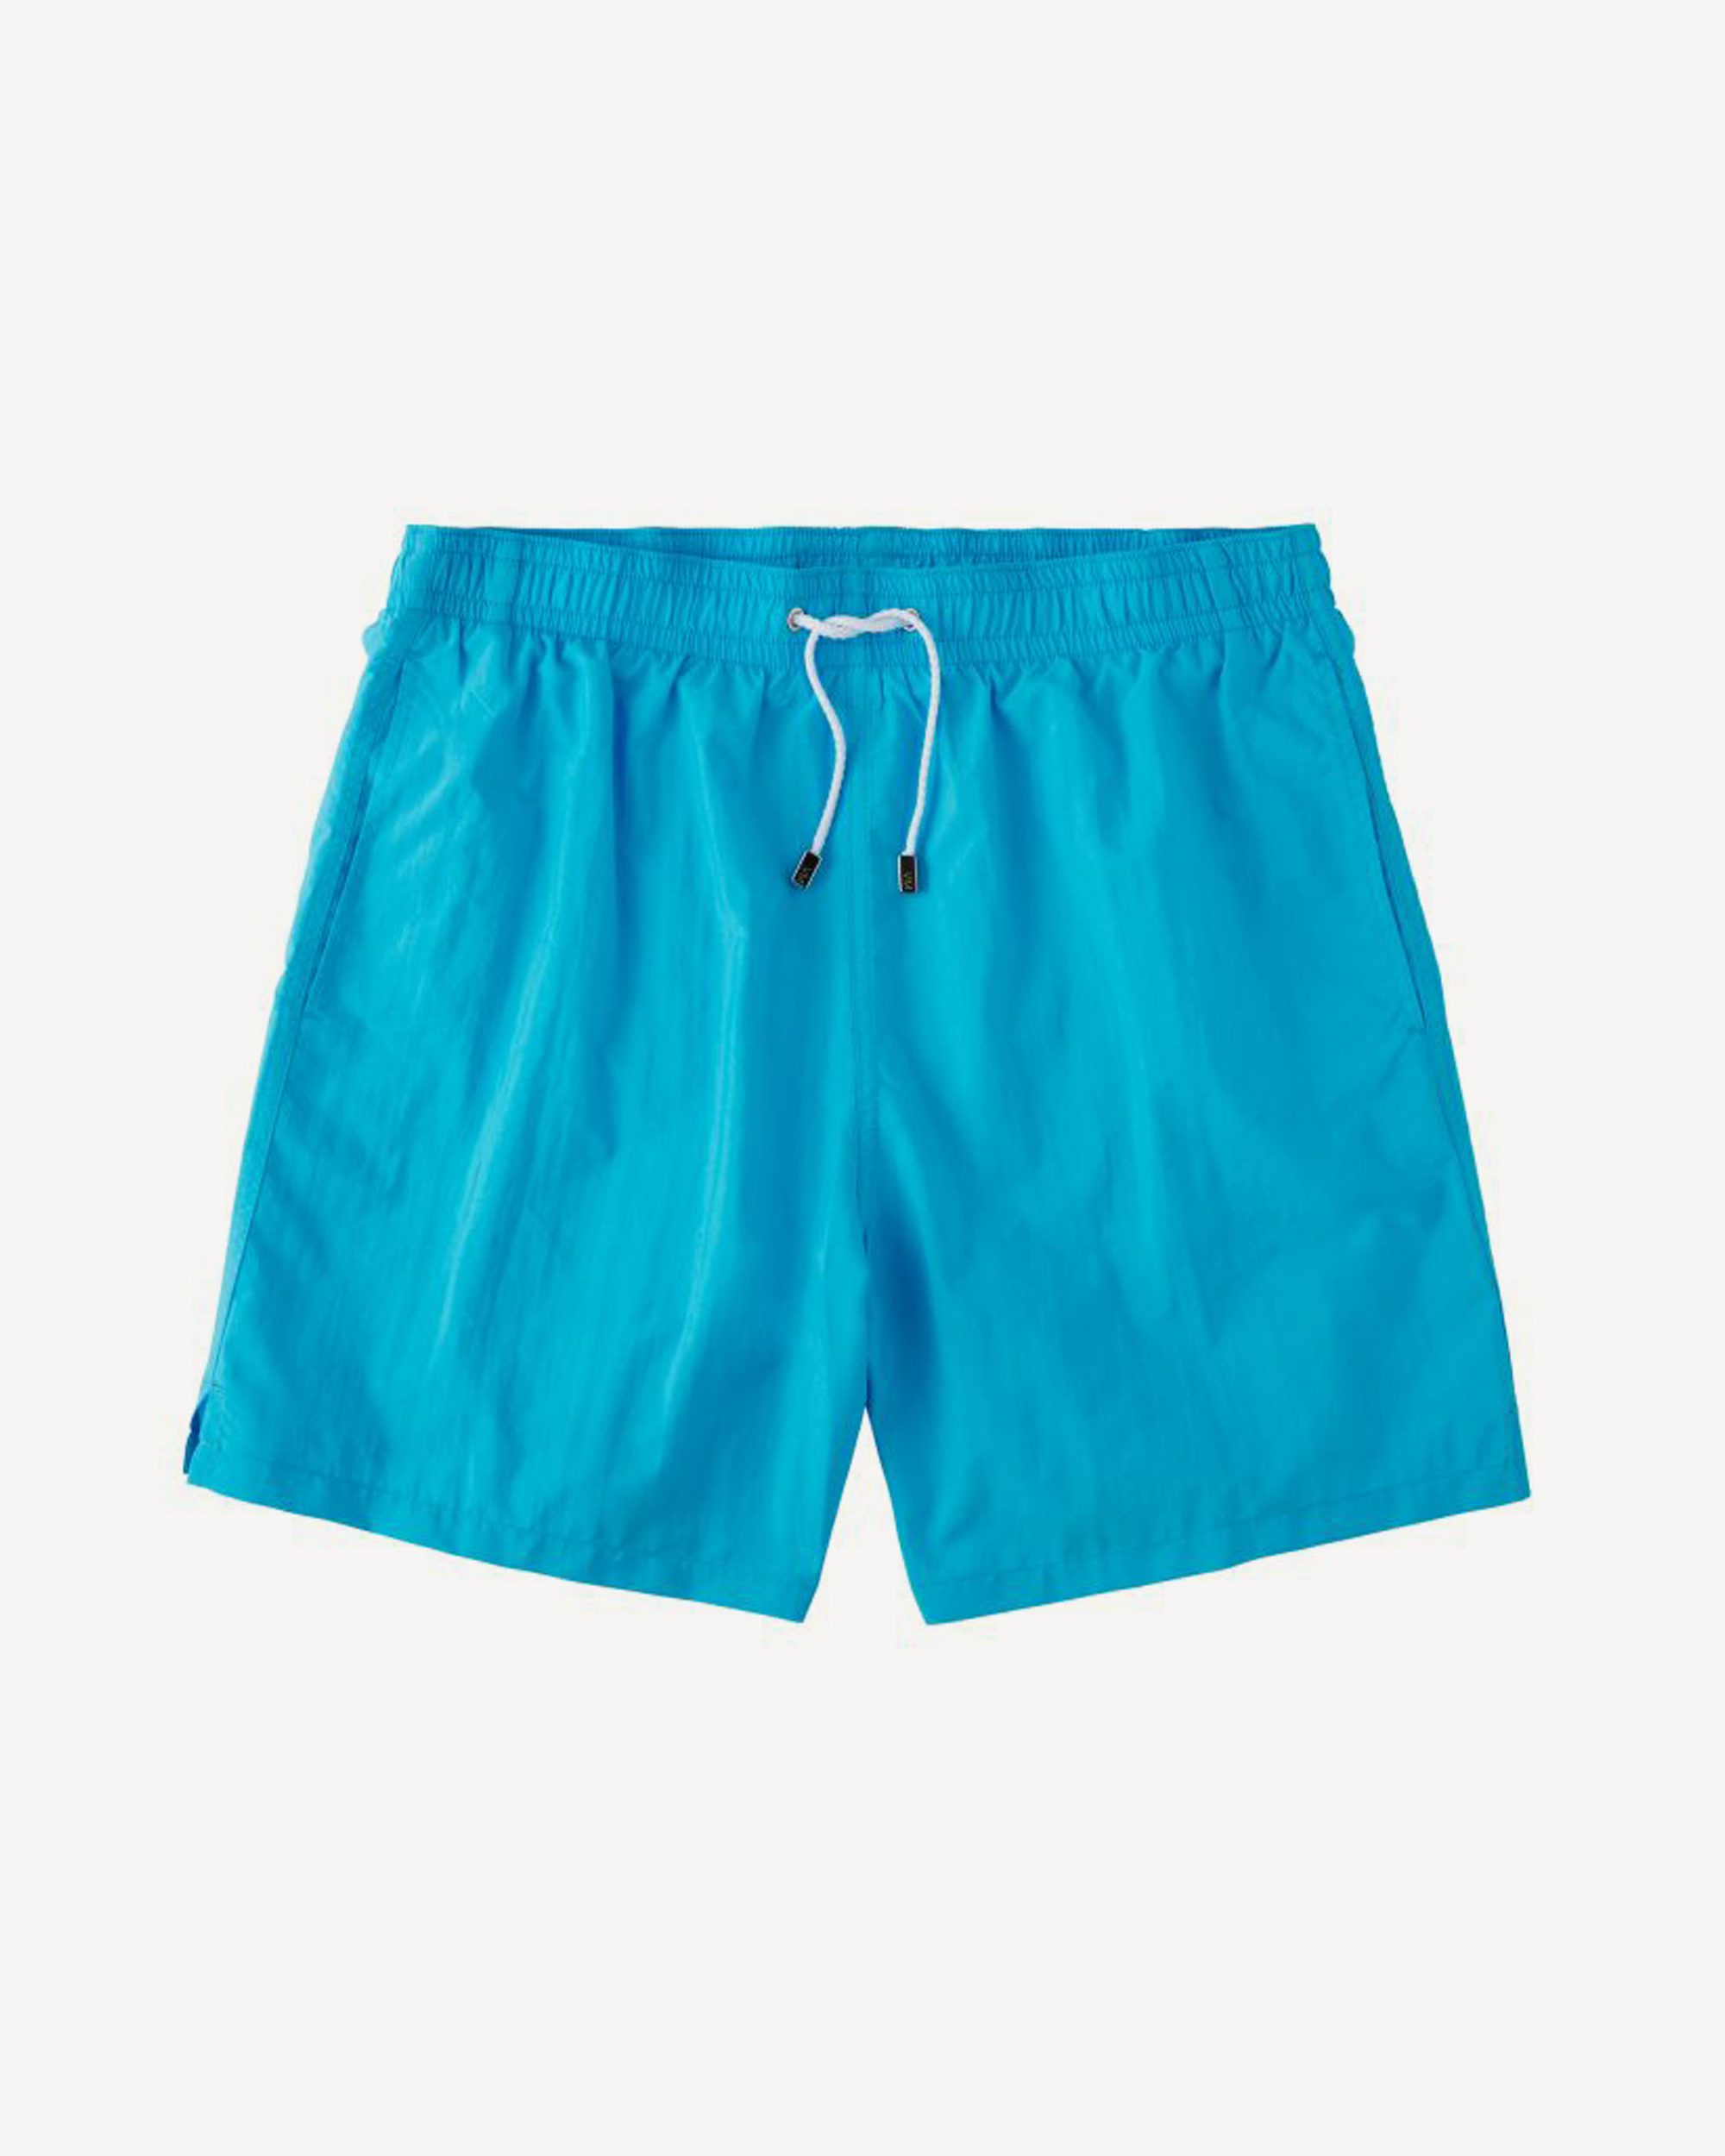 Classic Solid Swimtrunks - Turquoise